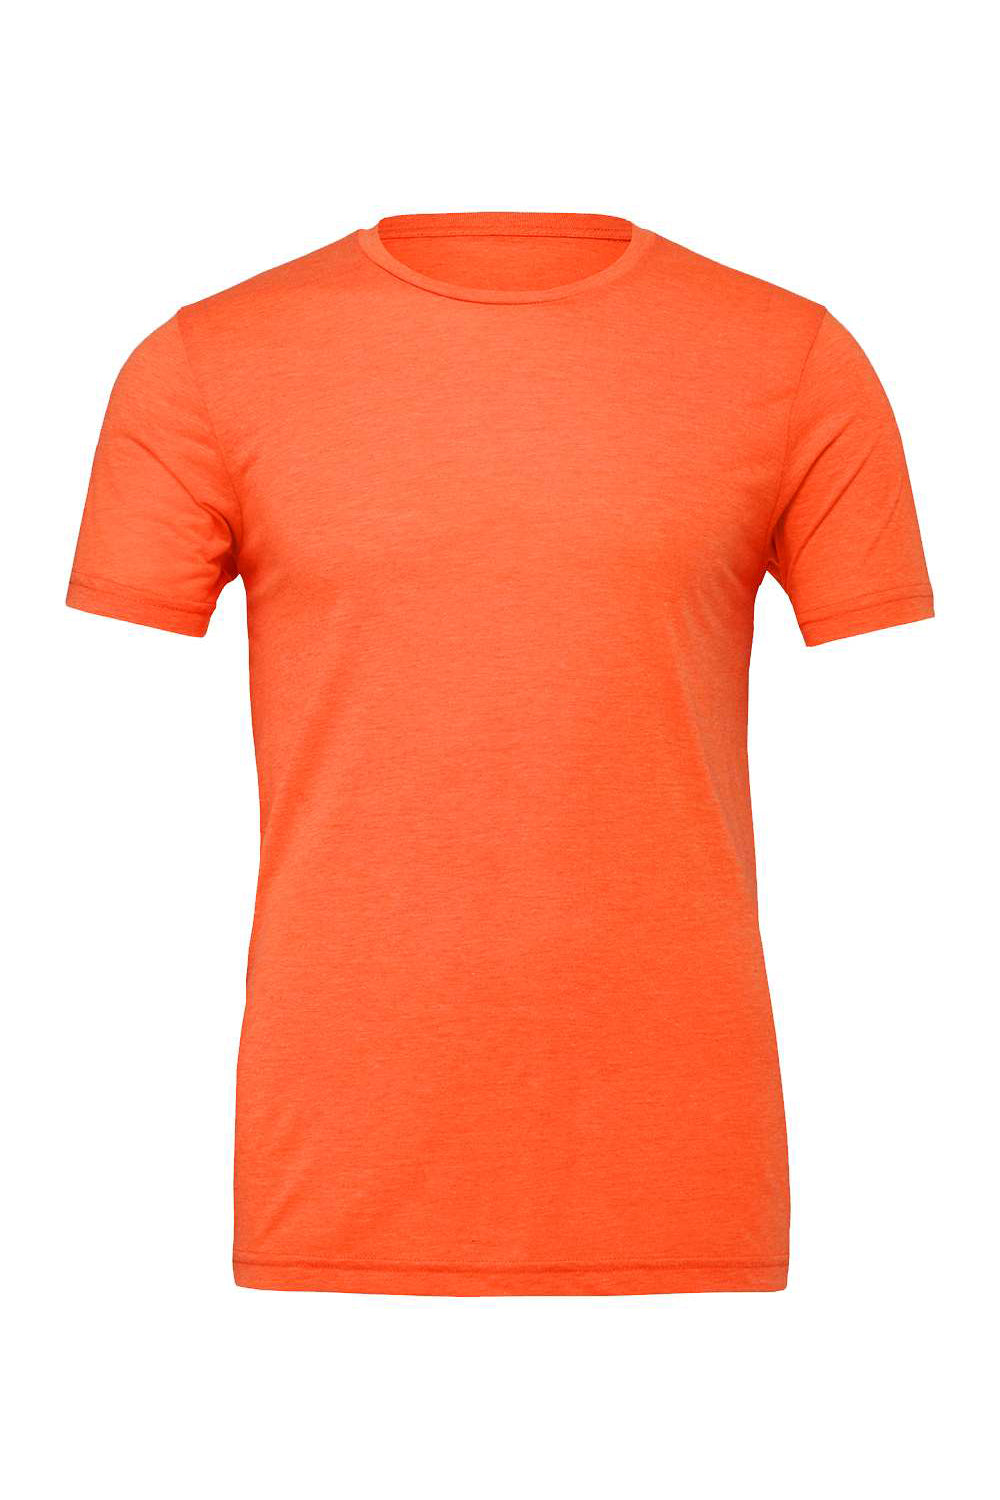 Bella + Canvas BC3001/3001C Mens Jersey Short Sleeve Crewneck T-Shirt Orange Flat Front